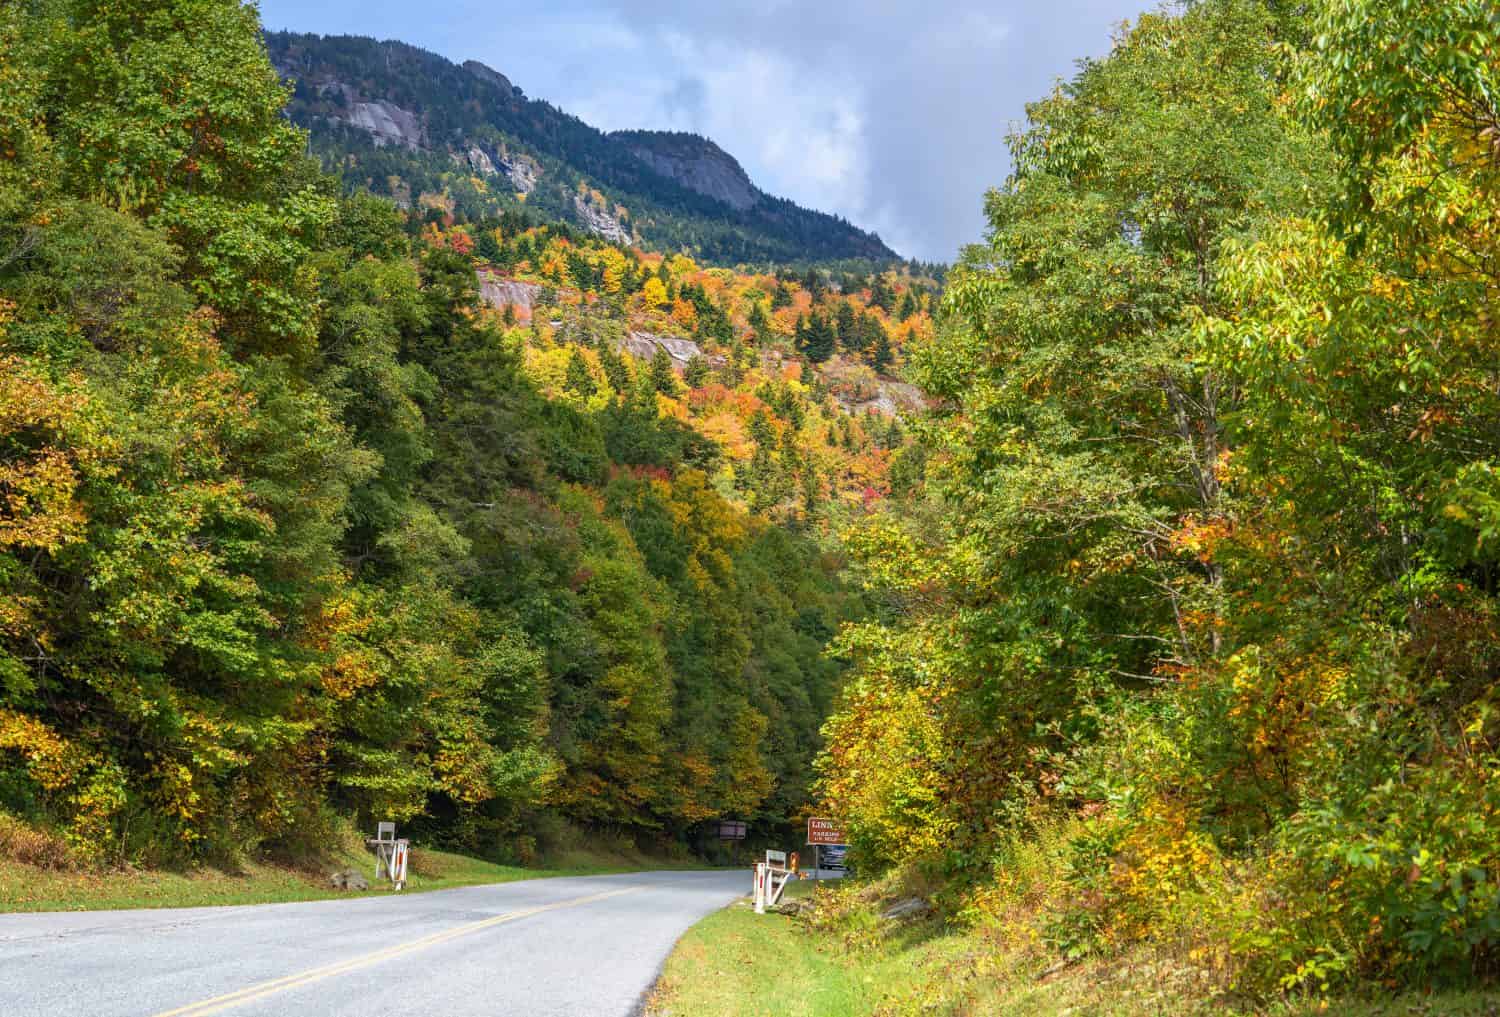 Blue Ridge Parkway autumn Landscape. North Carolina Highlands and Grandfather Mountain. Road winding in autumn mountains. Near Asheville, North Carolina. USA. Copy space.